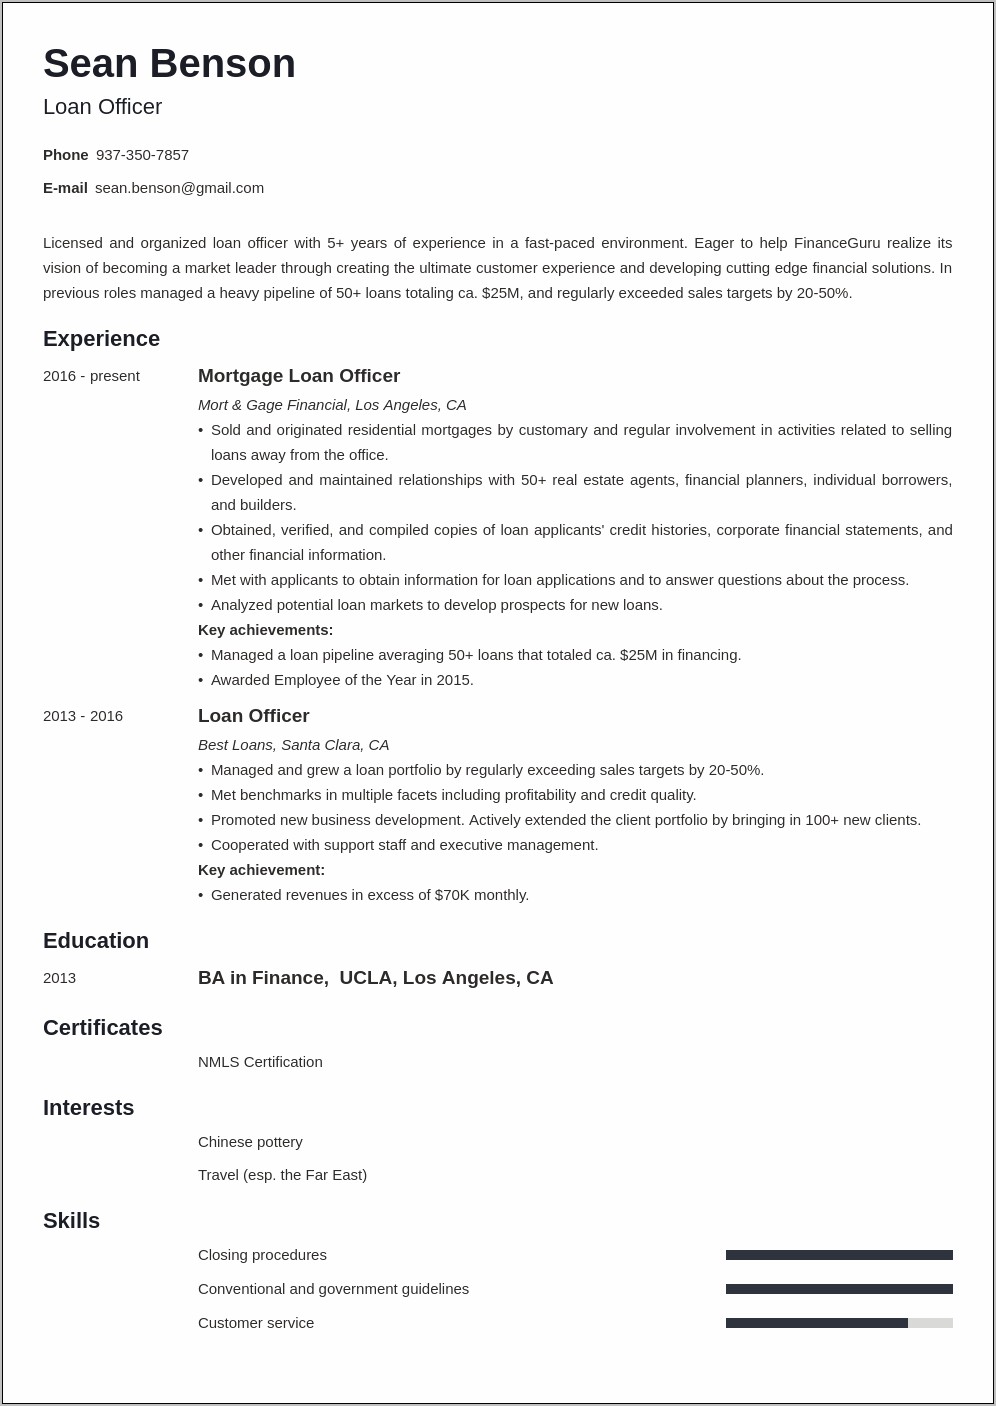 Mortgage Loan Processor Cover Letter Resume